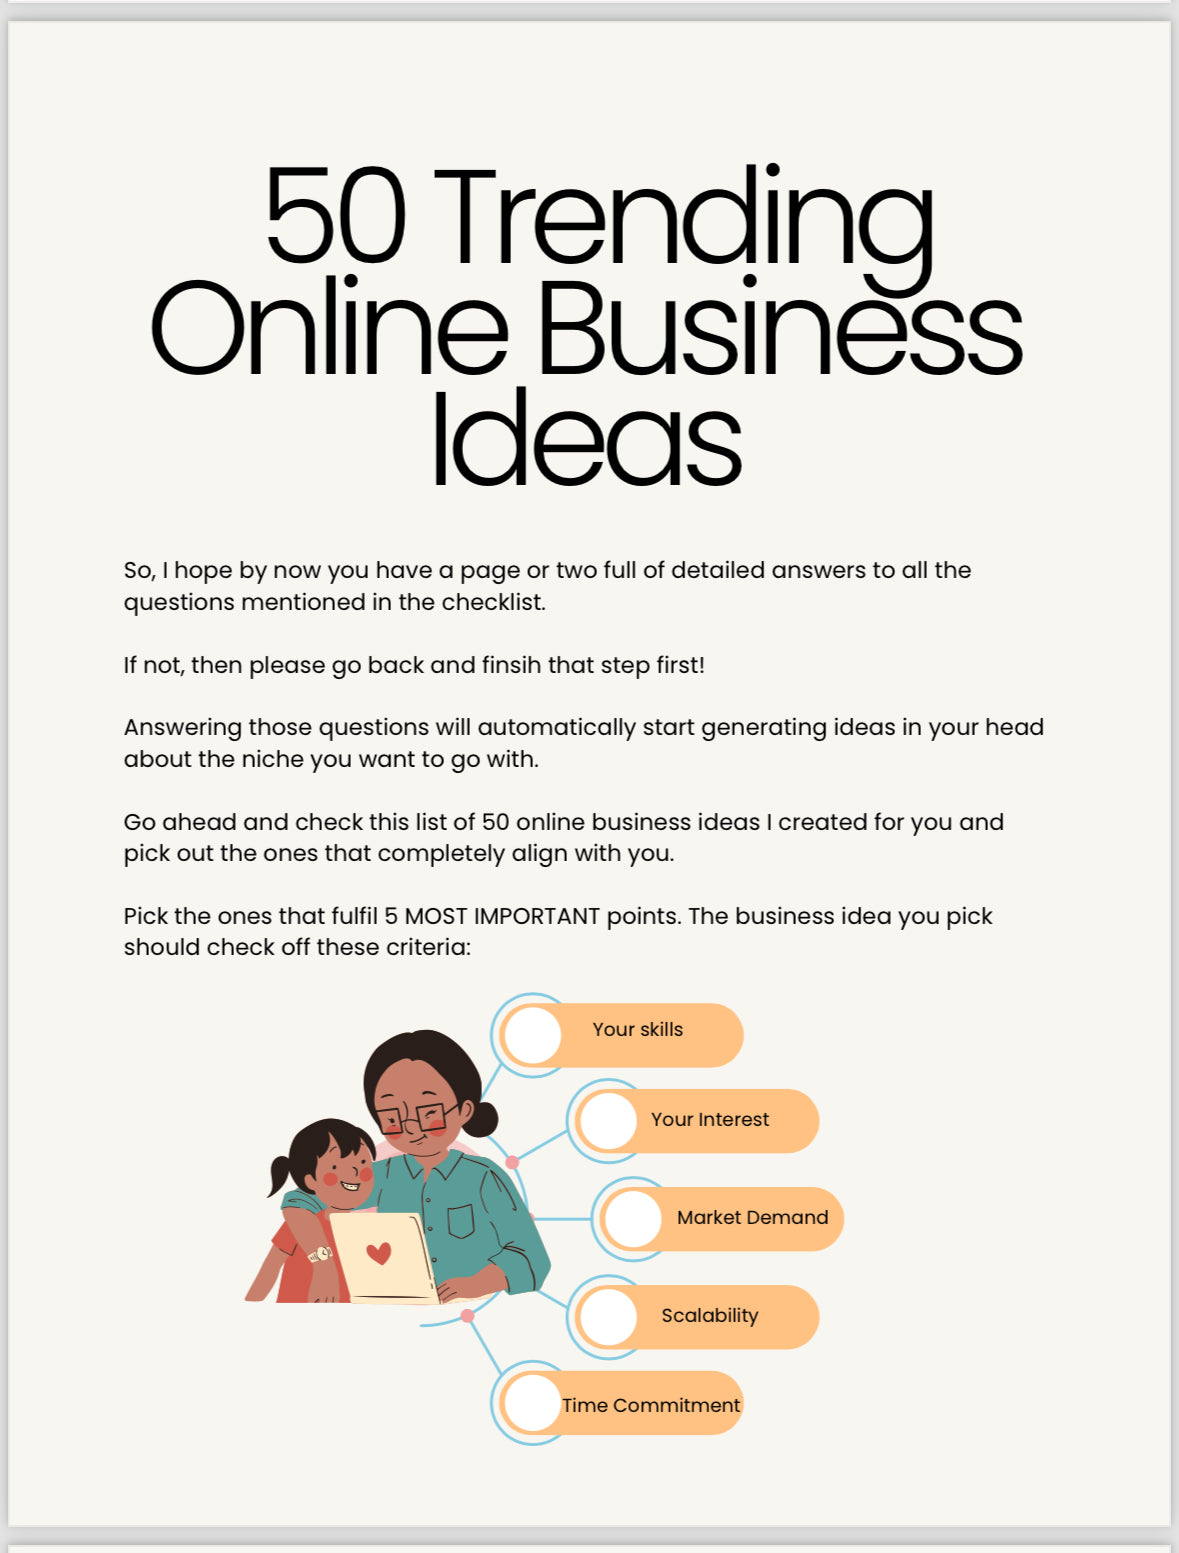 50 Trending Onljne Business Ideas